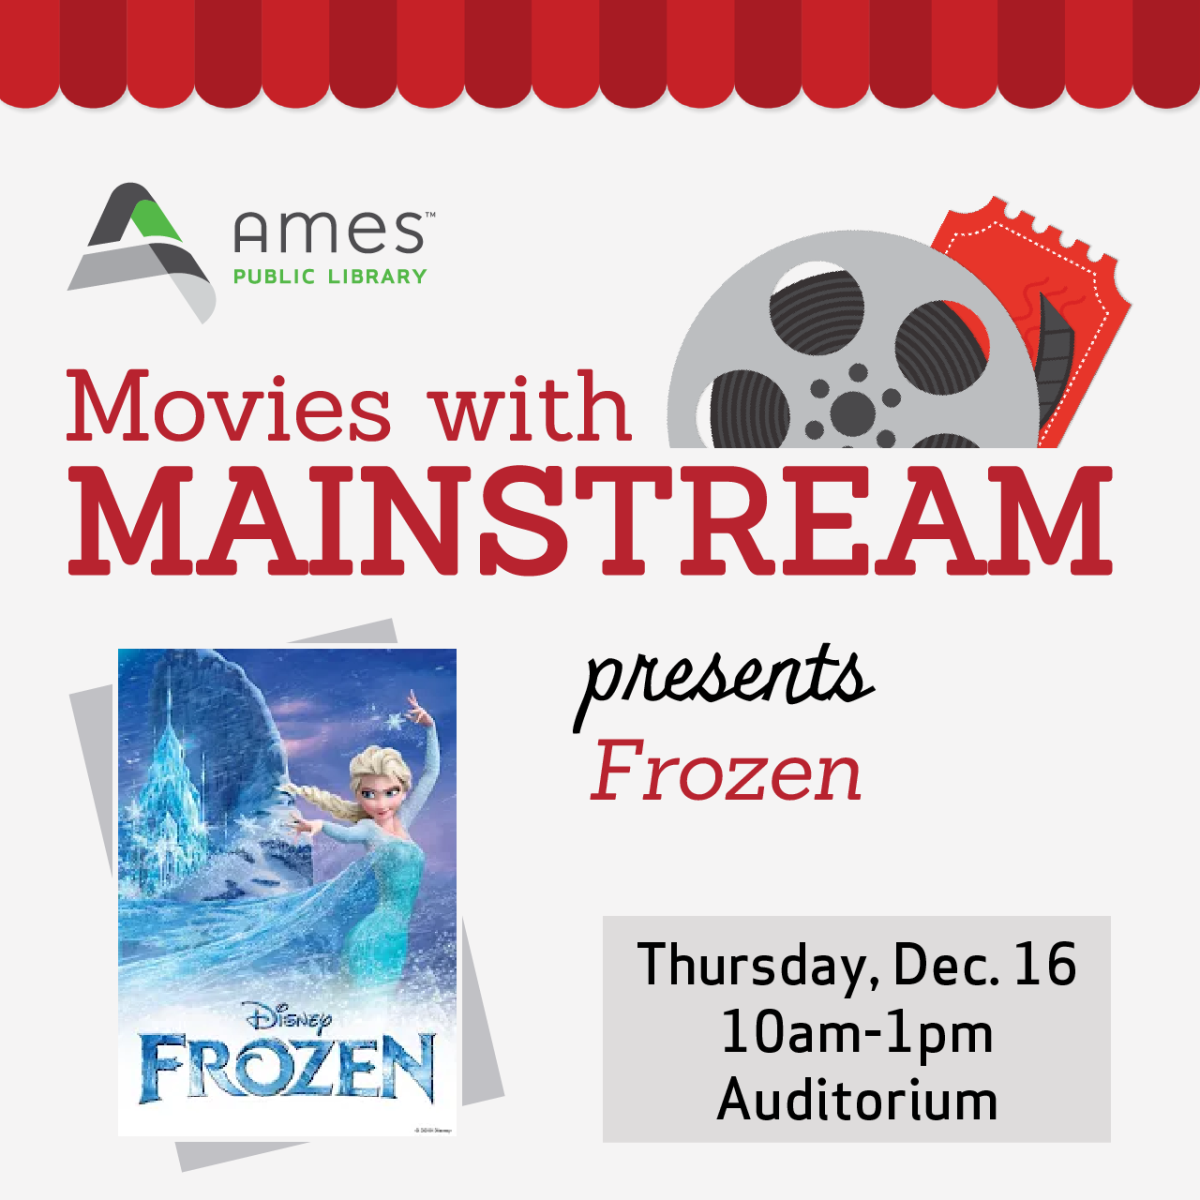 Ames Public Library Movies with Mainstream presents Frozen Thursday, Dec. 16, 10am-1pm, Auditorium